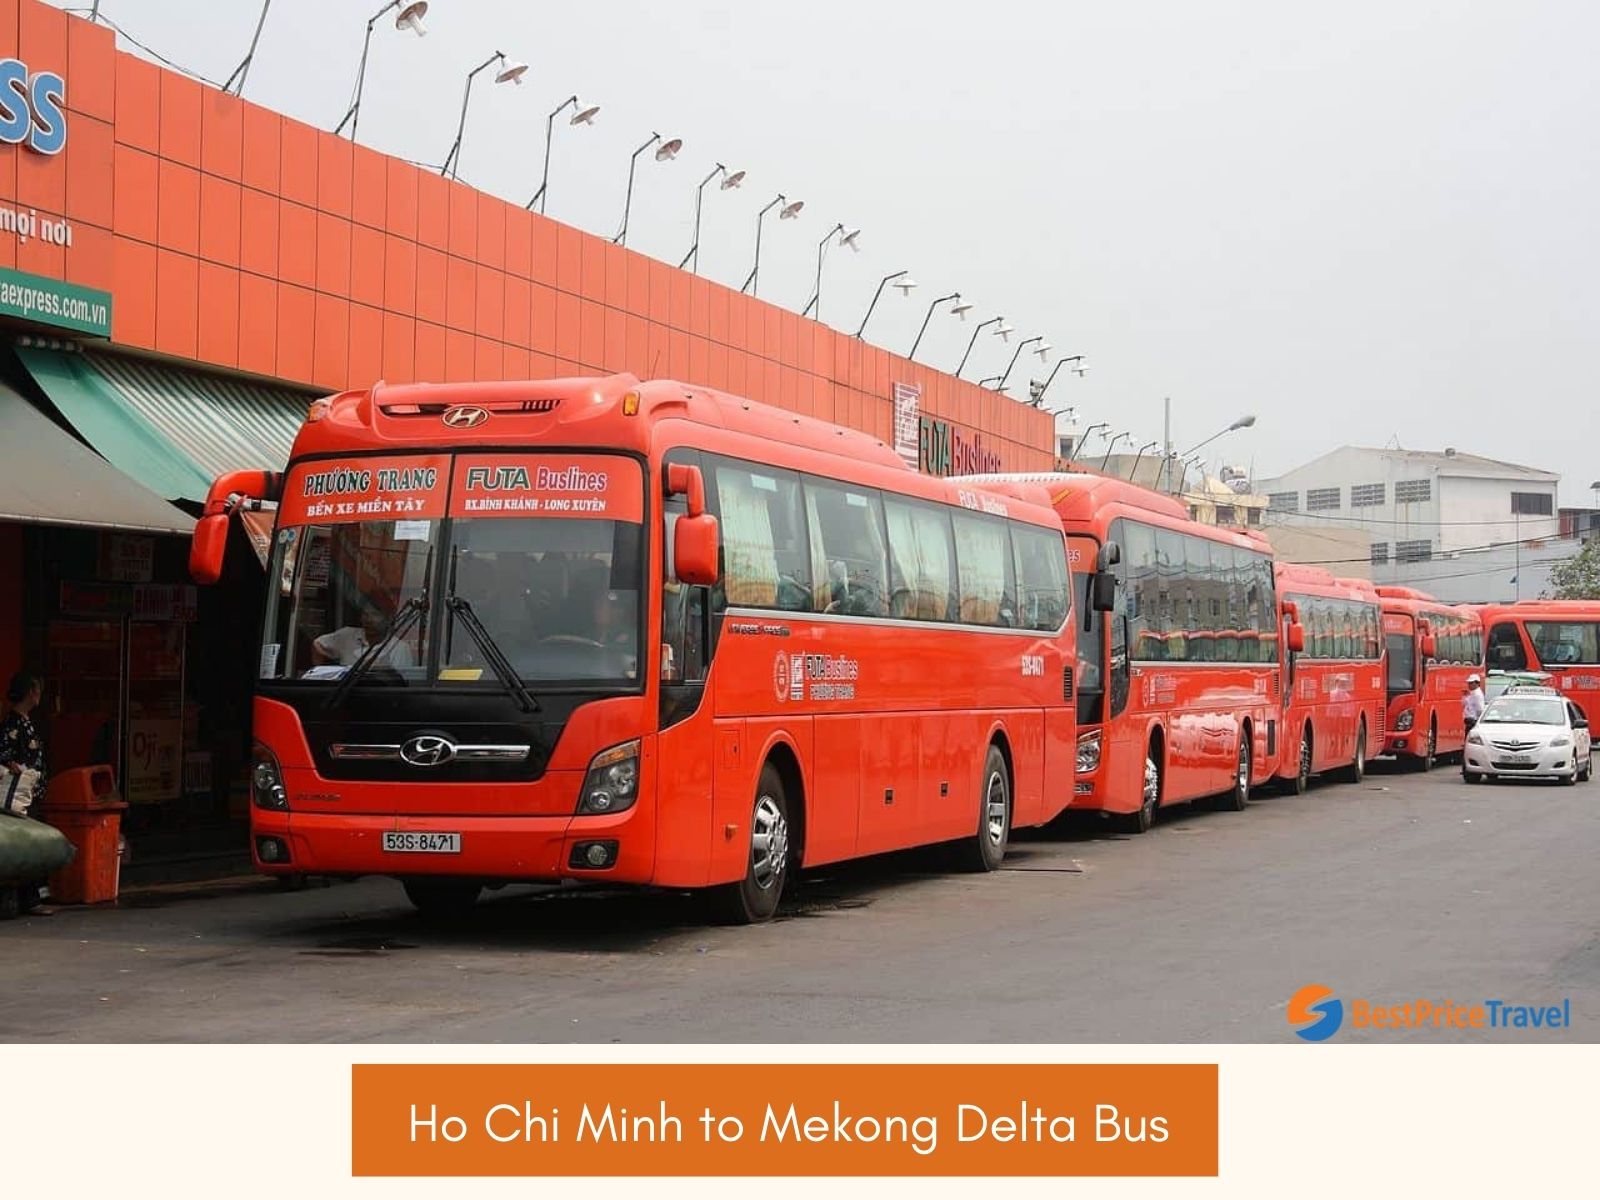 Ho Chi Minh to Mekong Delta bus